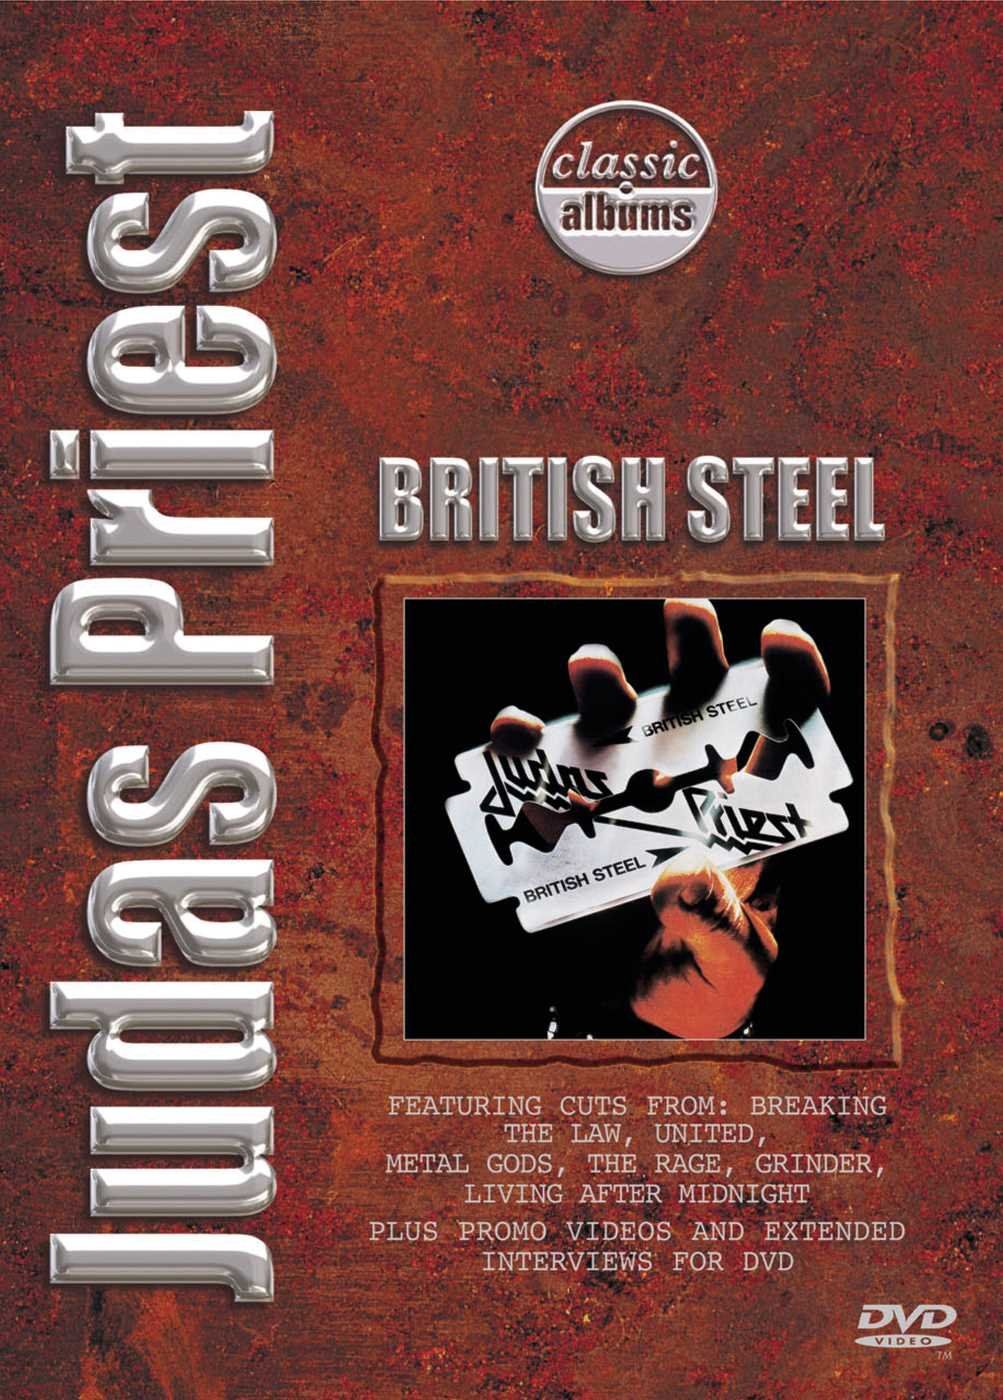 Judas Priest - British Steel DVD.jpg